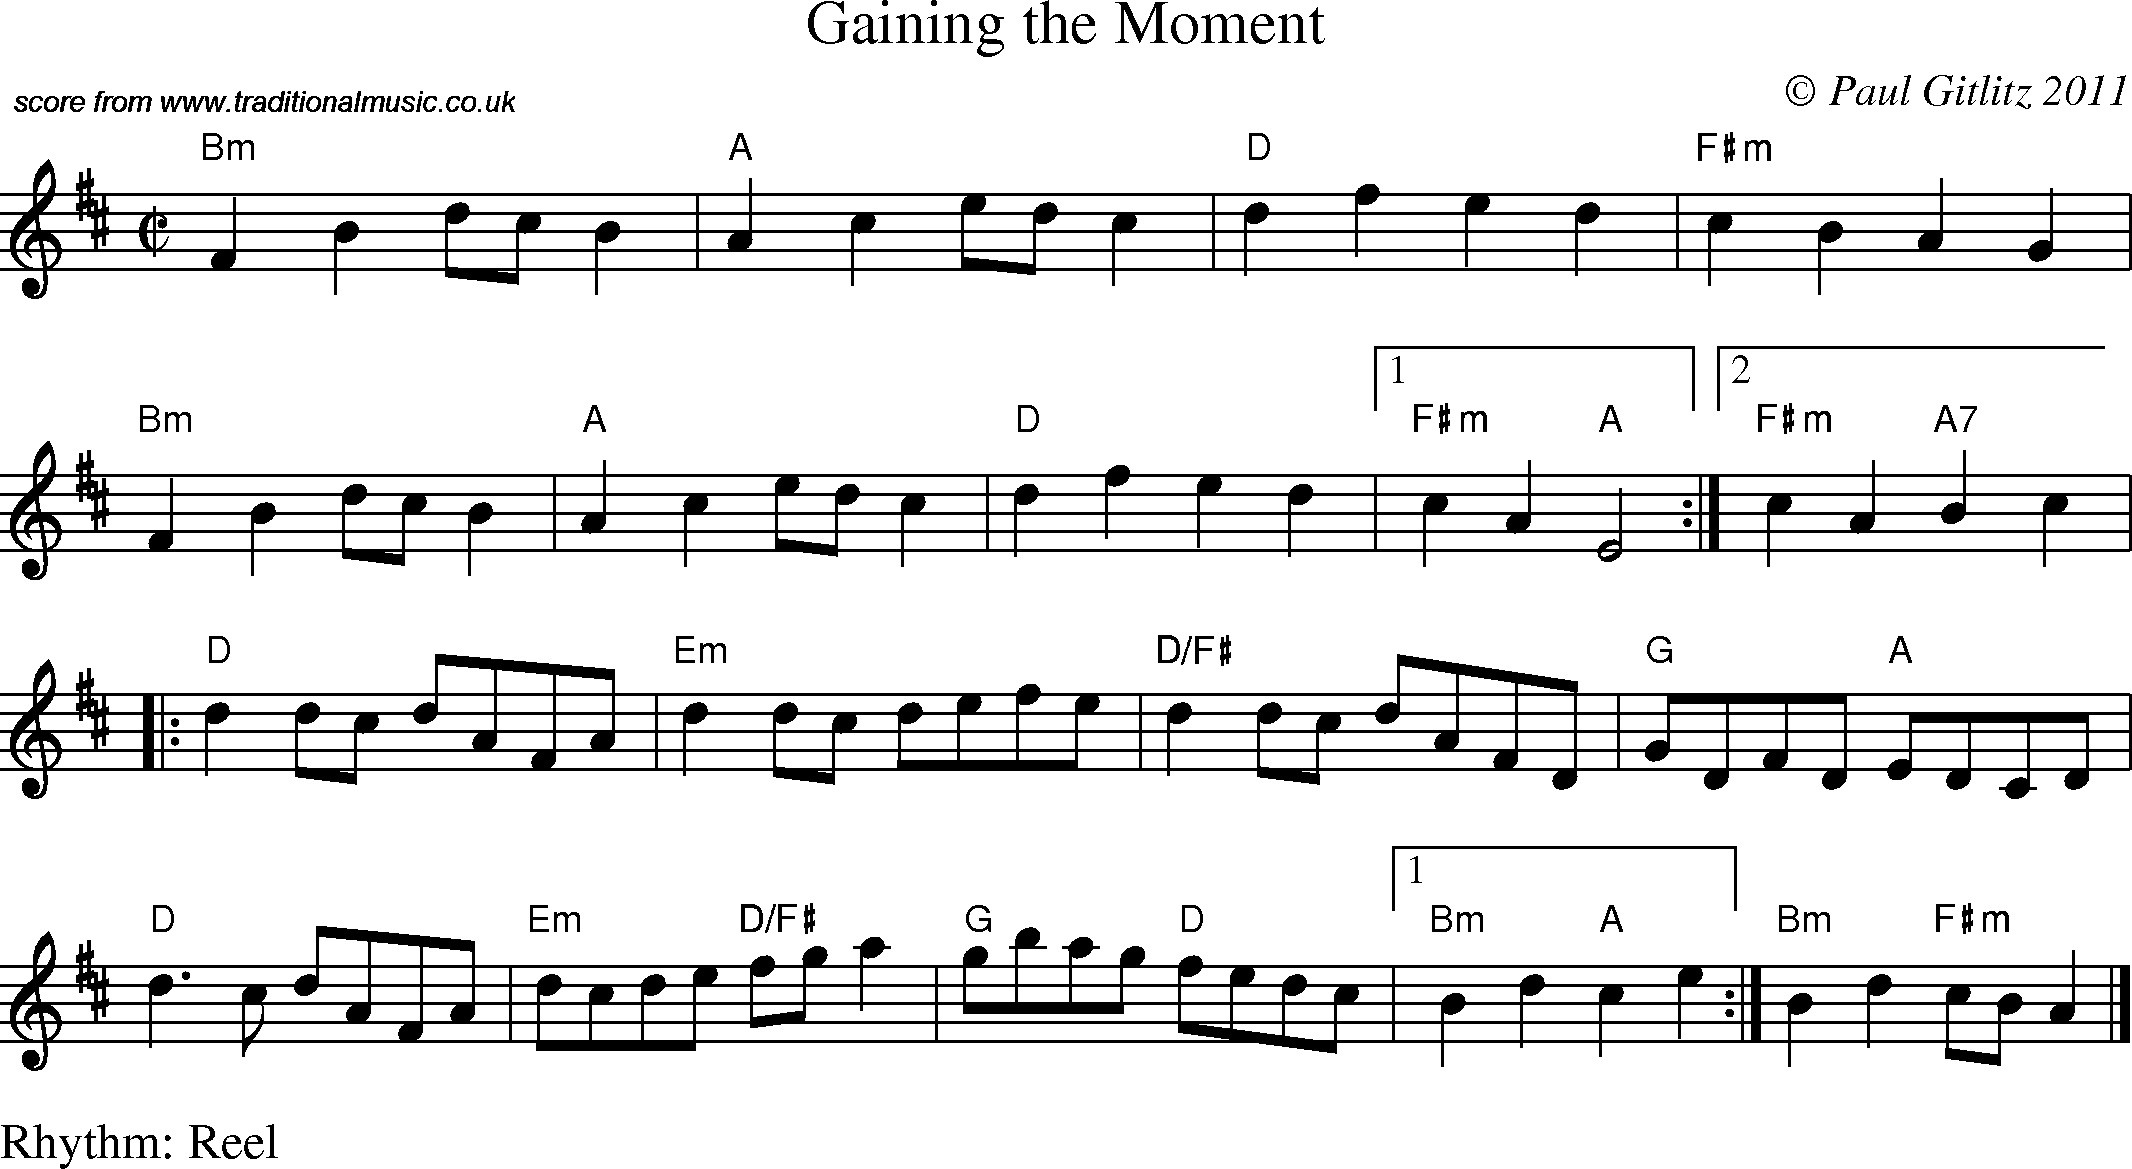 Sheet Music Score for Reel - Gaining the Moment